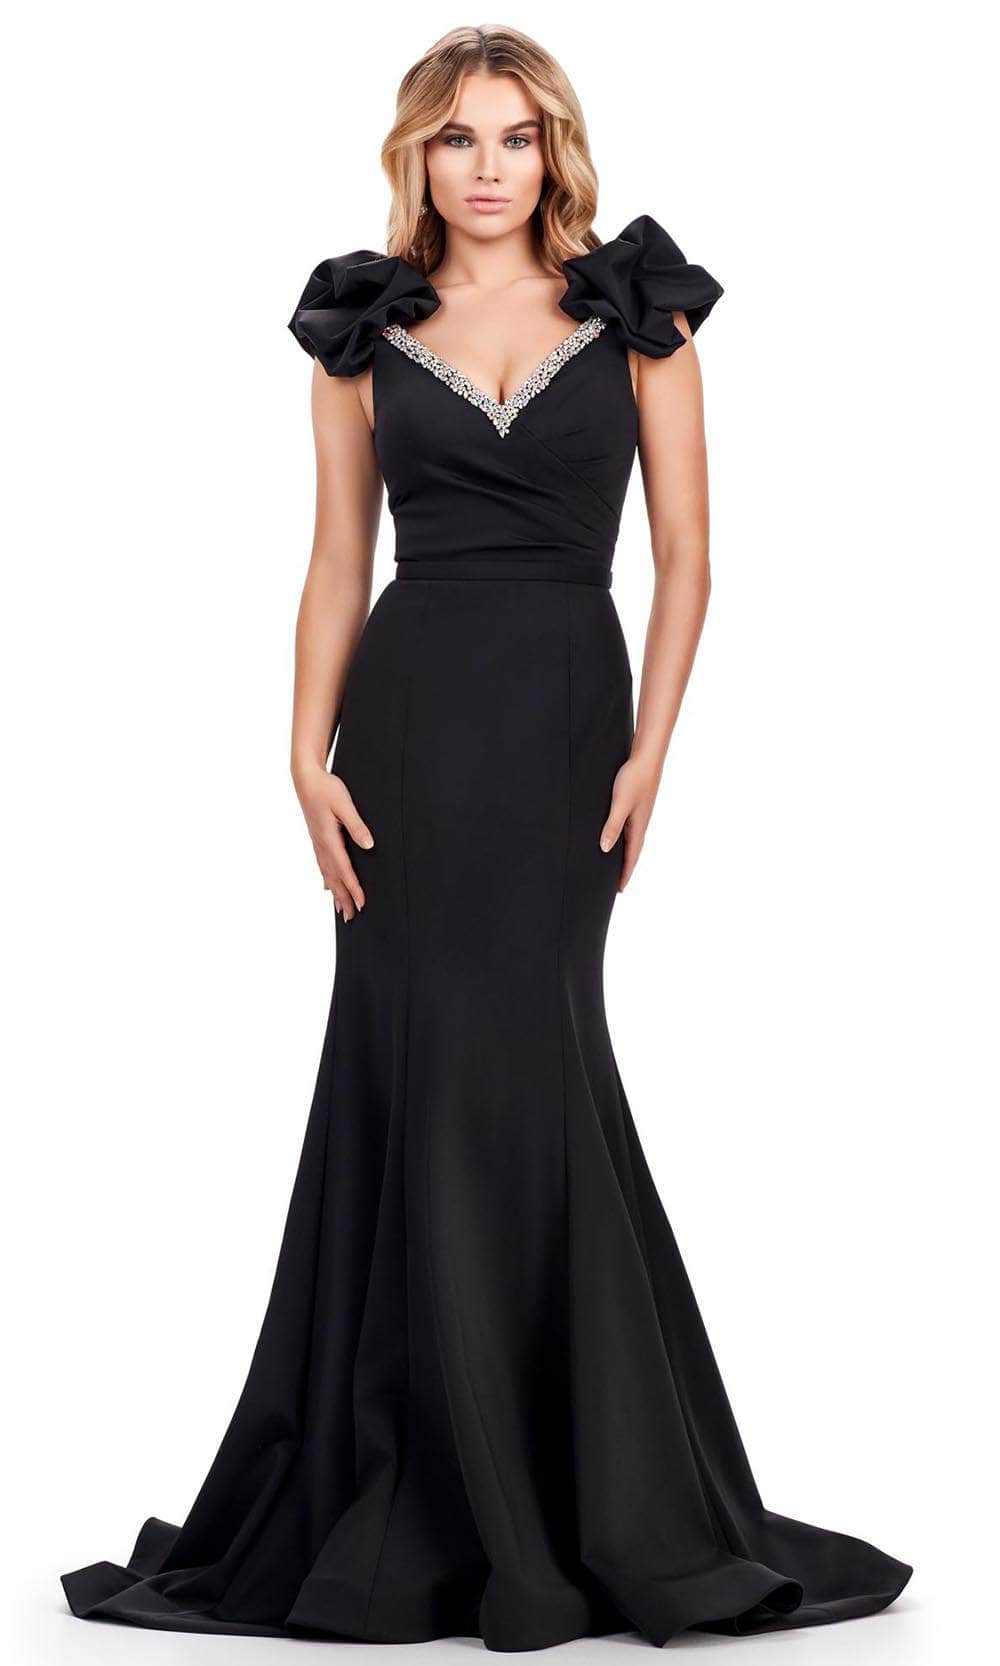 Ashley Lauren 11615 - Beaded Trim V-Neck Evening Gown Evening Dresses